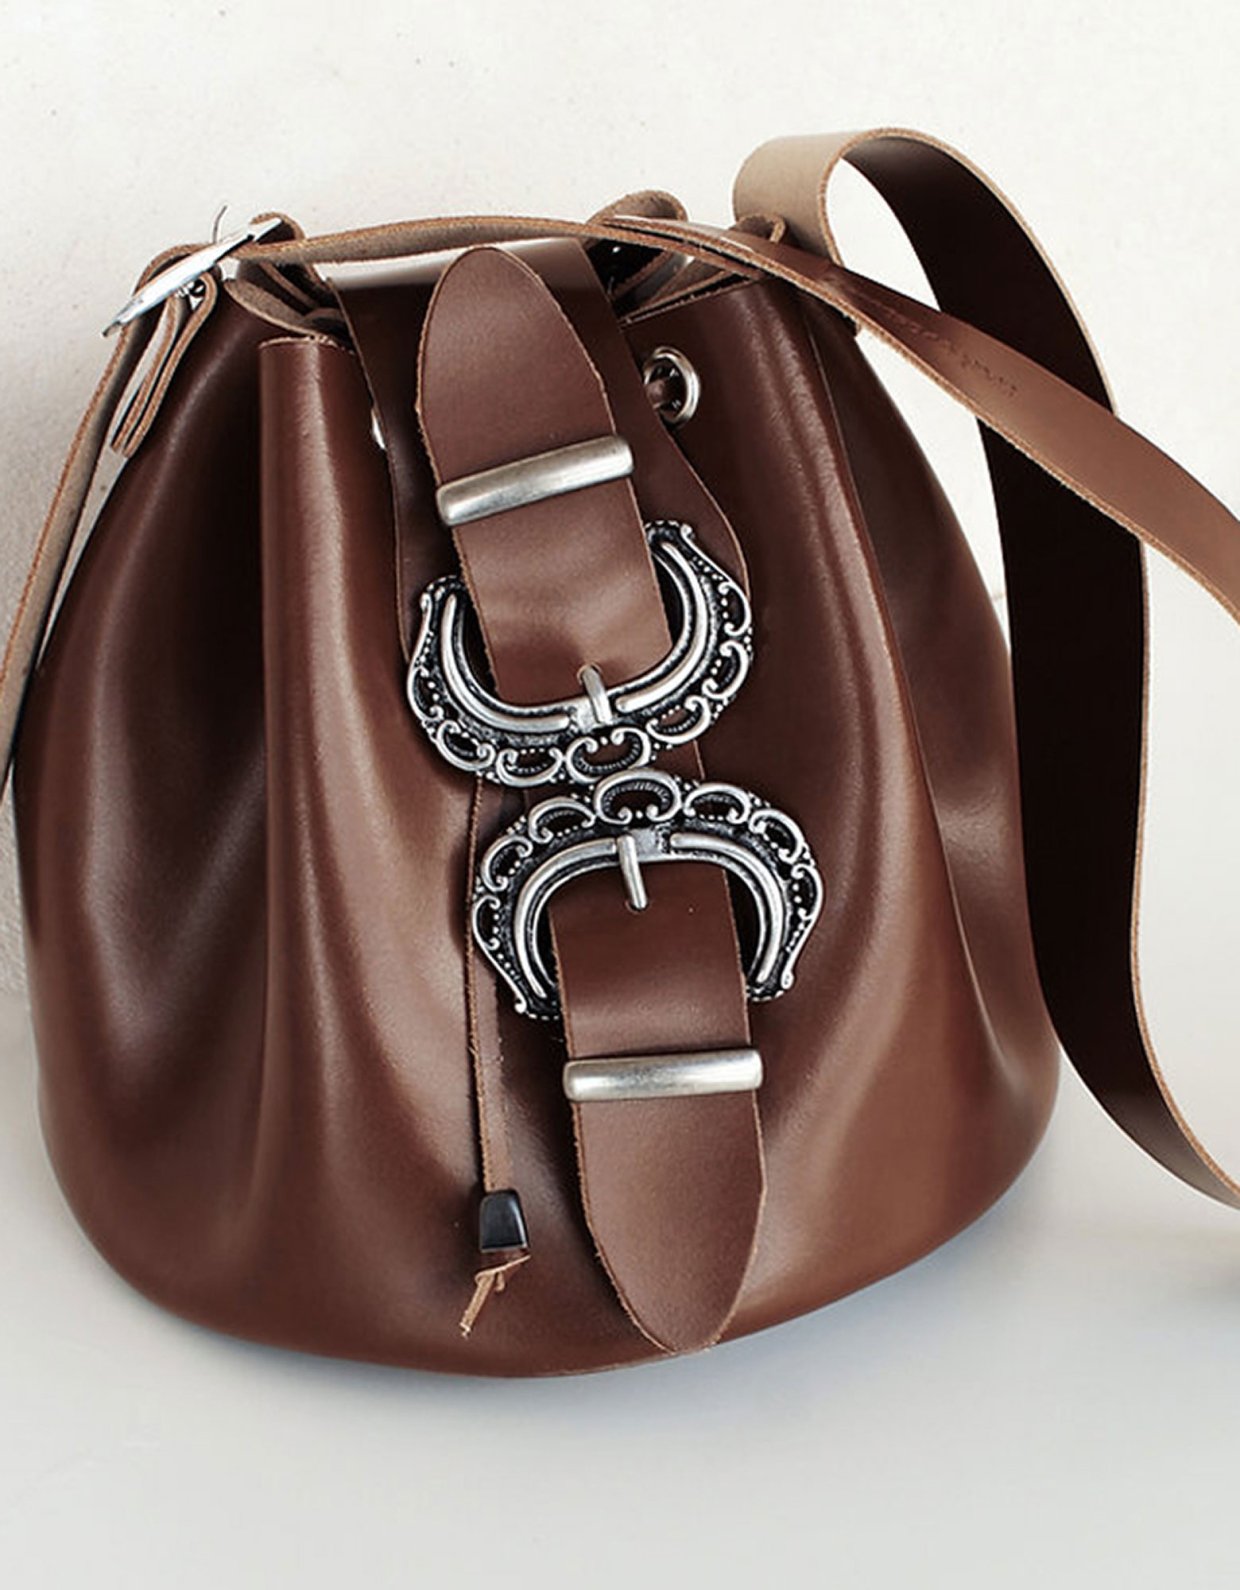 Individual Art Leather Everloving taba bag